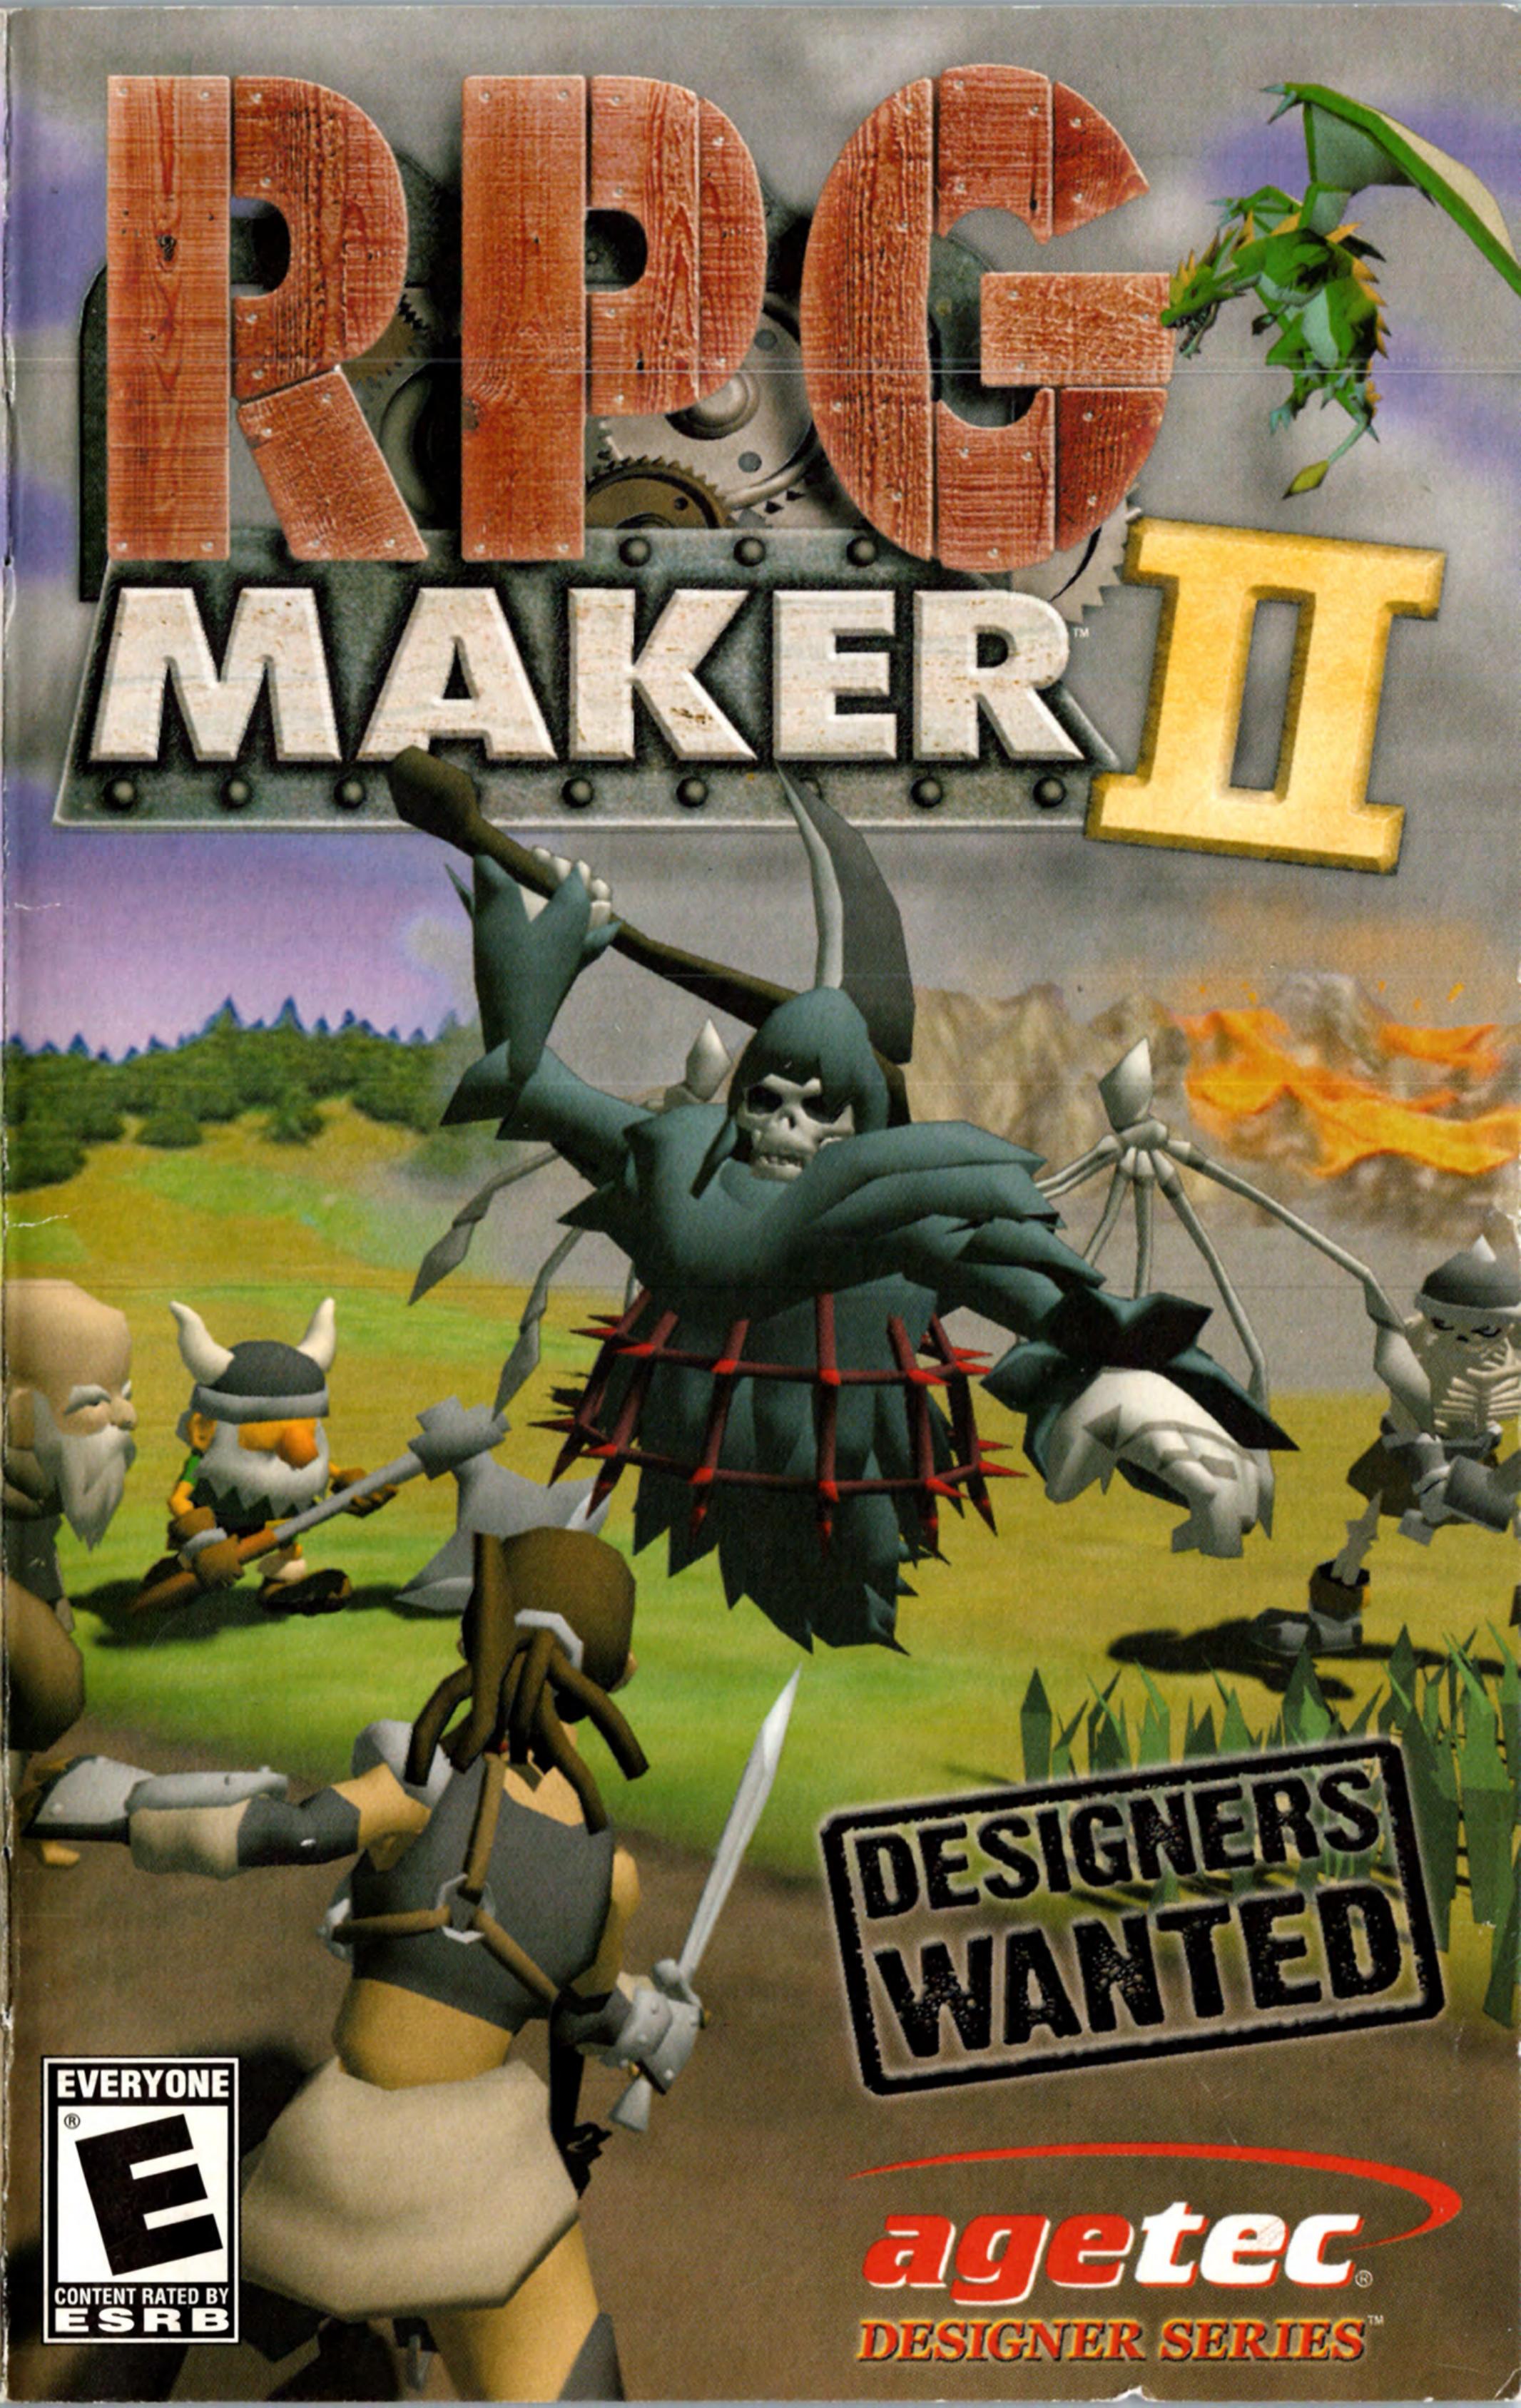 RPG Maker II (USA) by Jonathan Grimm